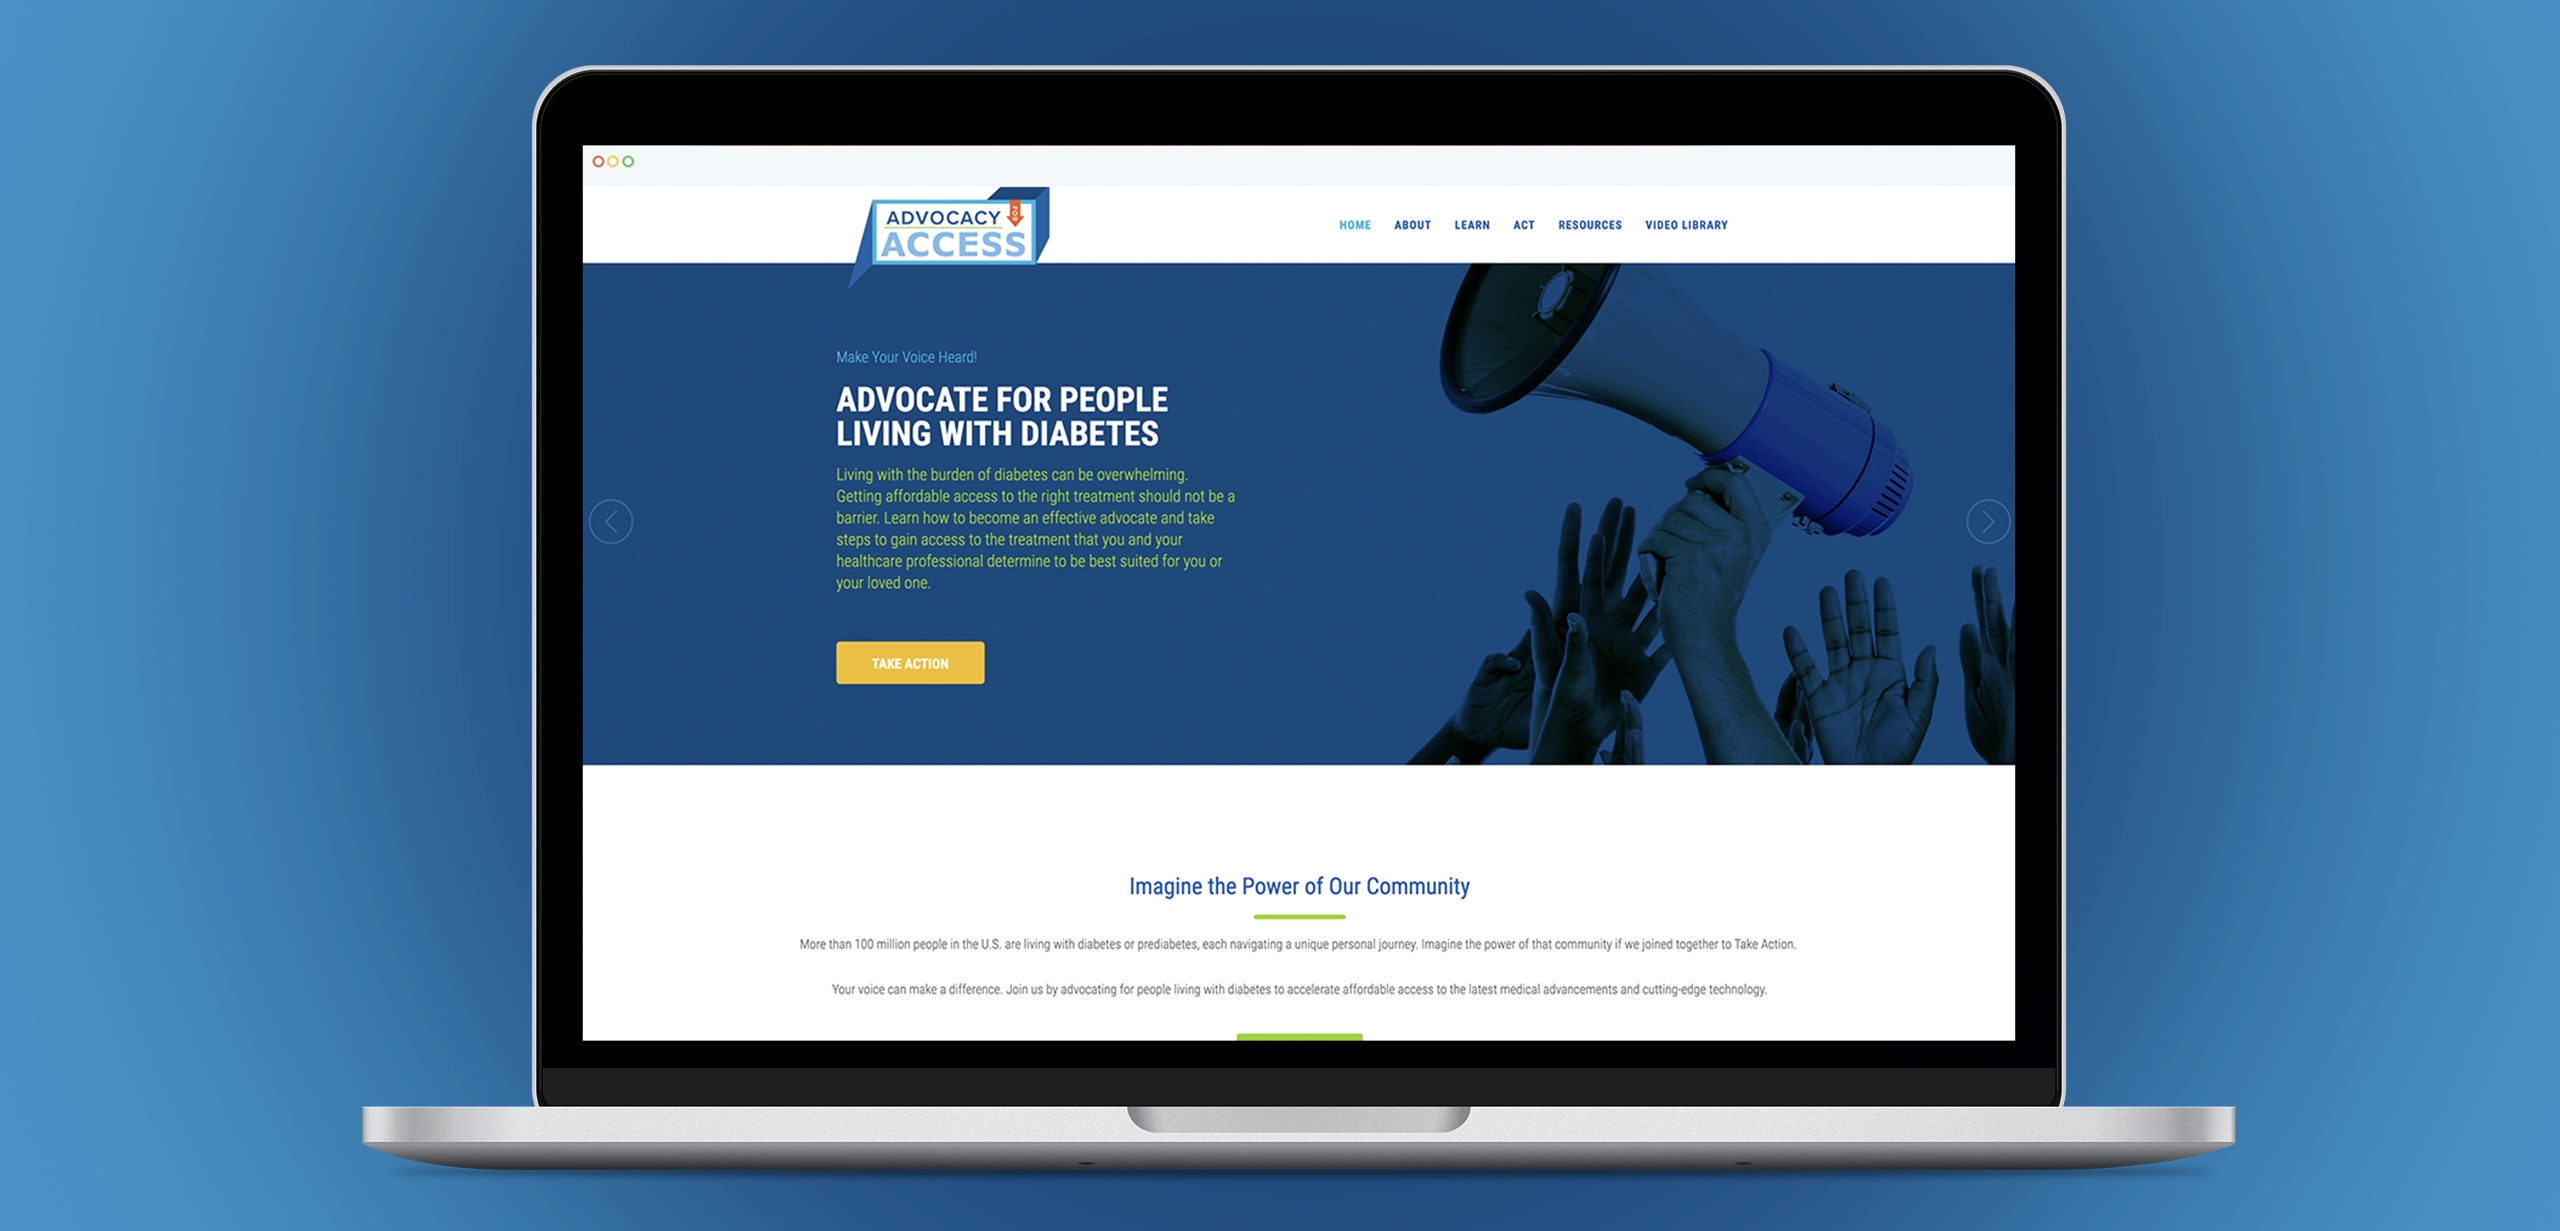 Healthcare advocacy group website design